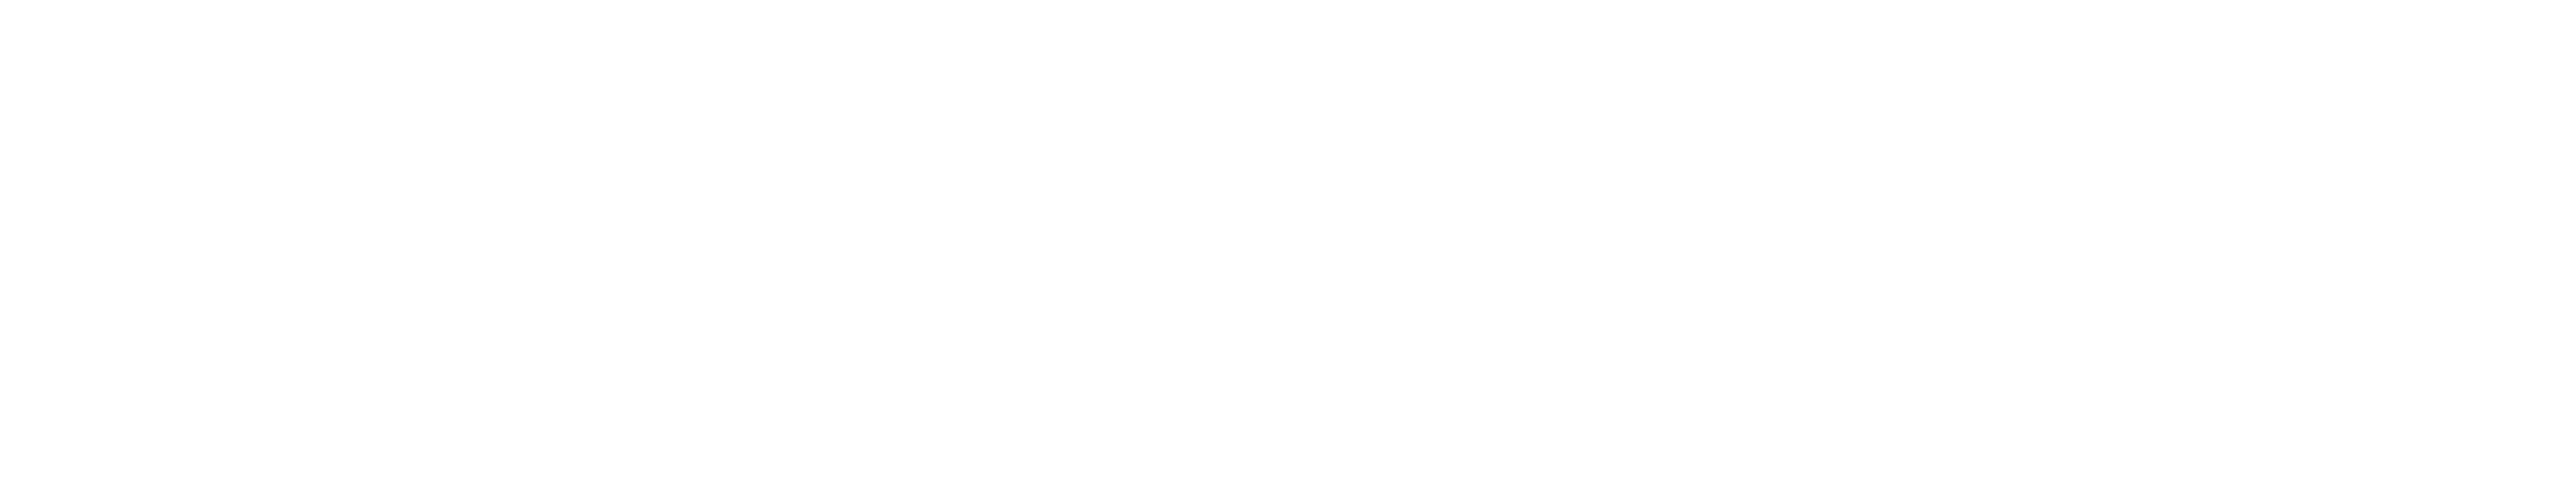 Berkshire Cal Hathaway logo